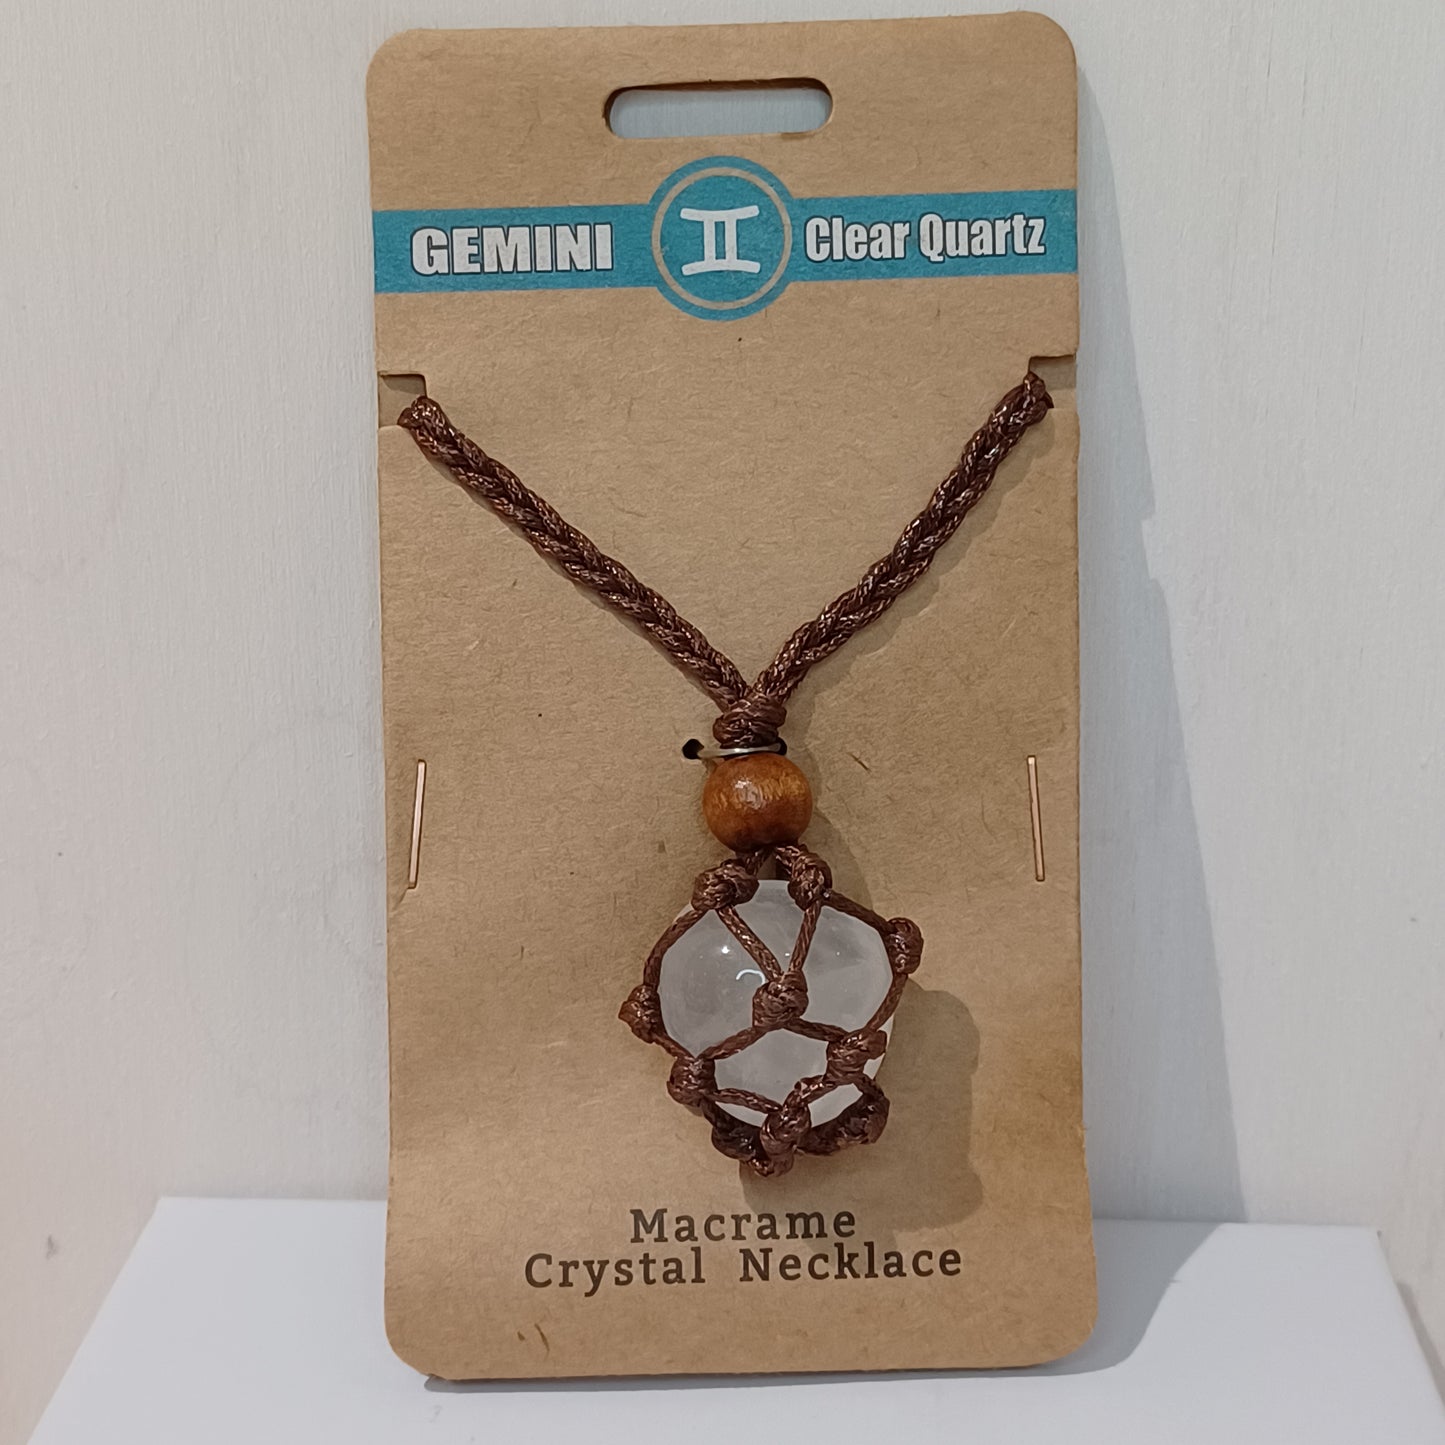 Macramé Crystal Necklace - Gemini Clear Quartz